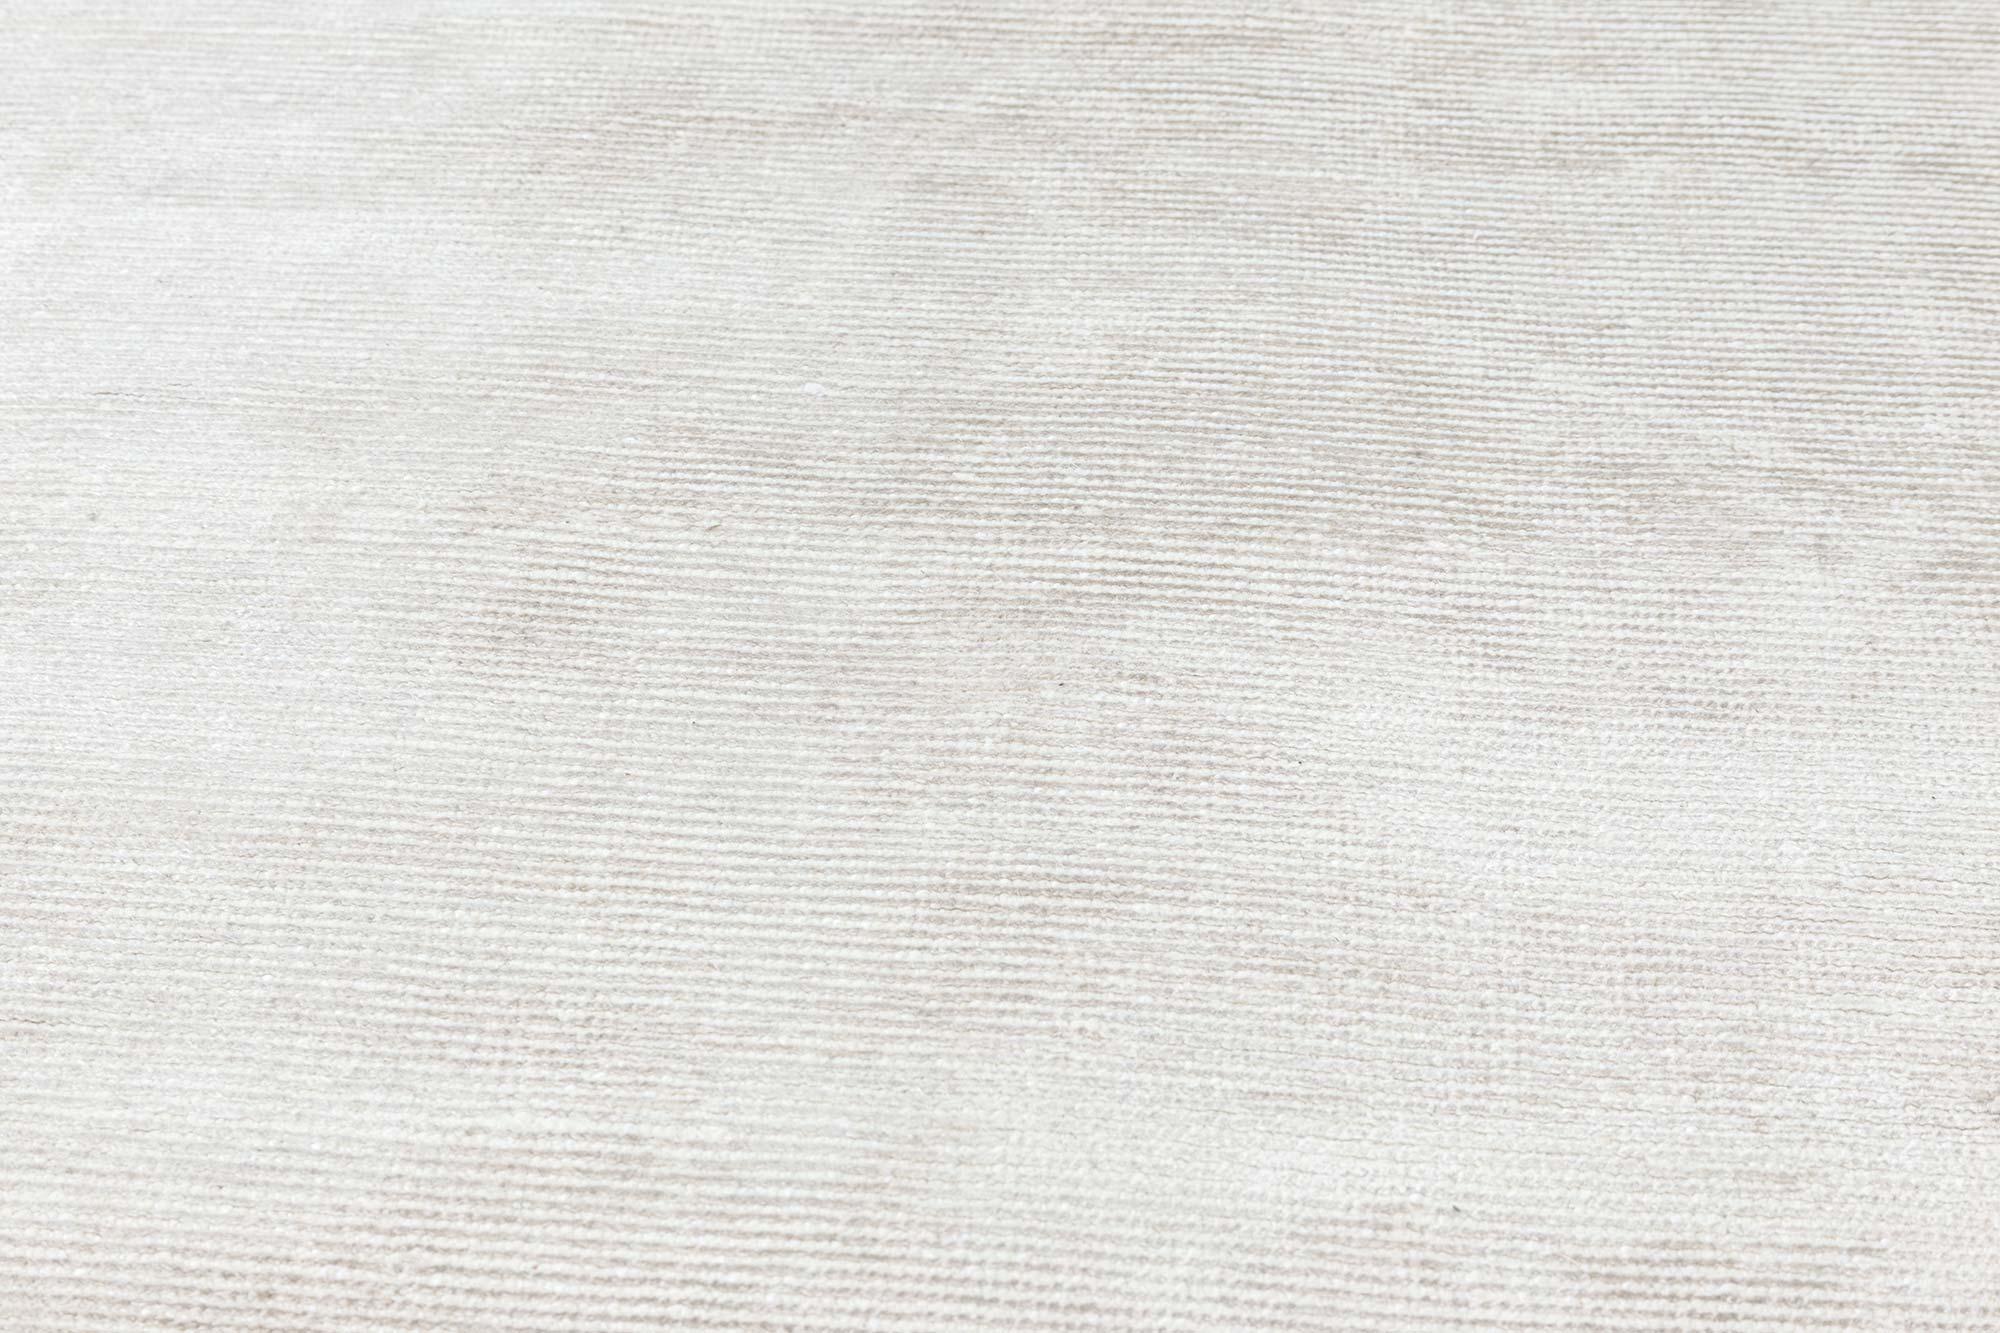 Oversized line grip Modern carpet by Doris Leslie Blau.
Size: 13'9